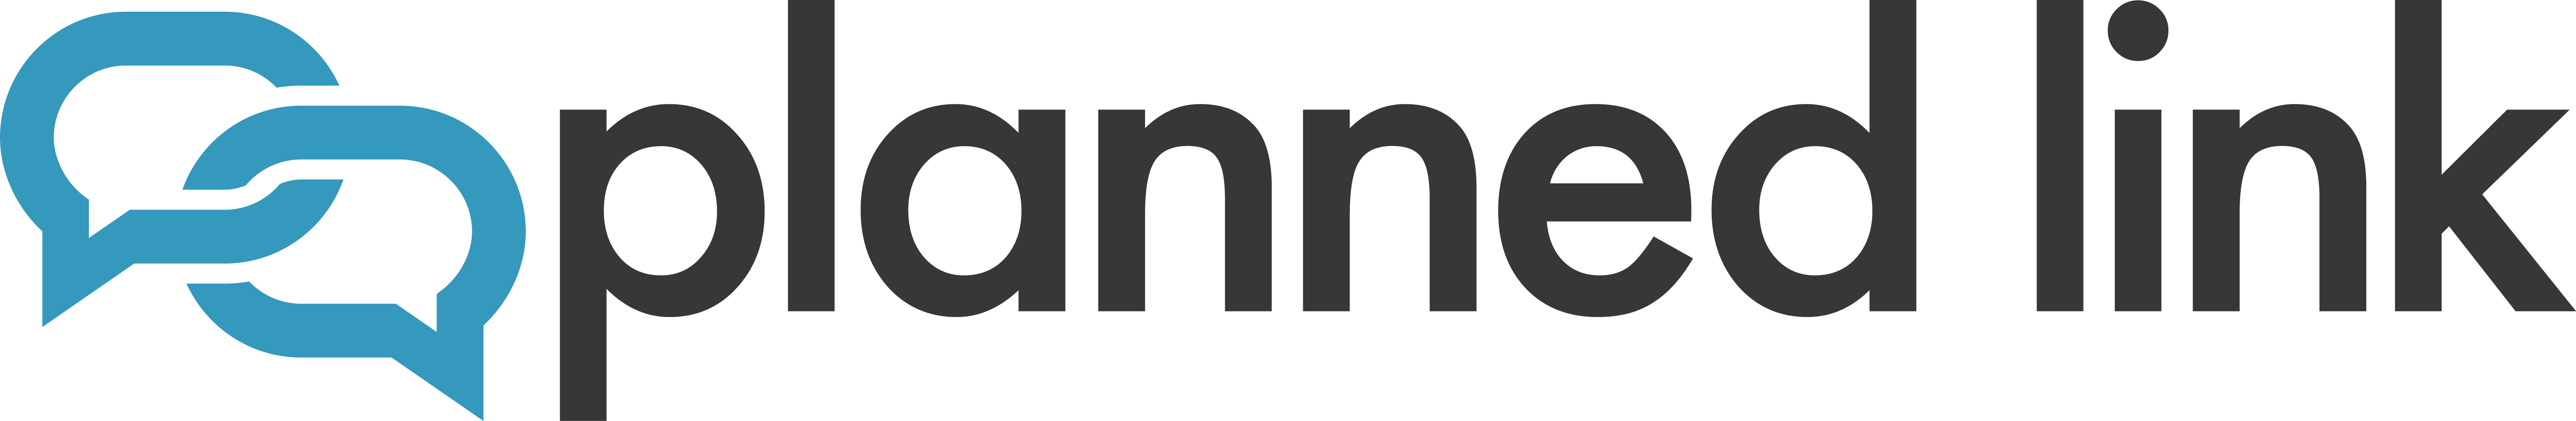 Planned Link Logo